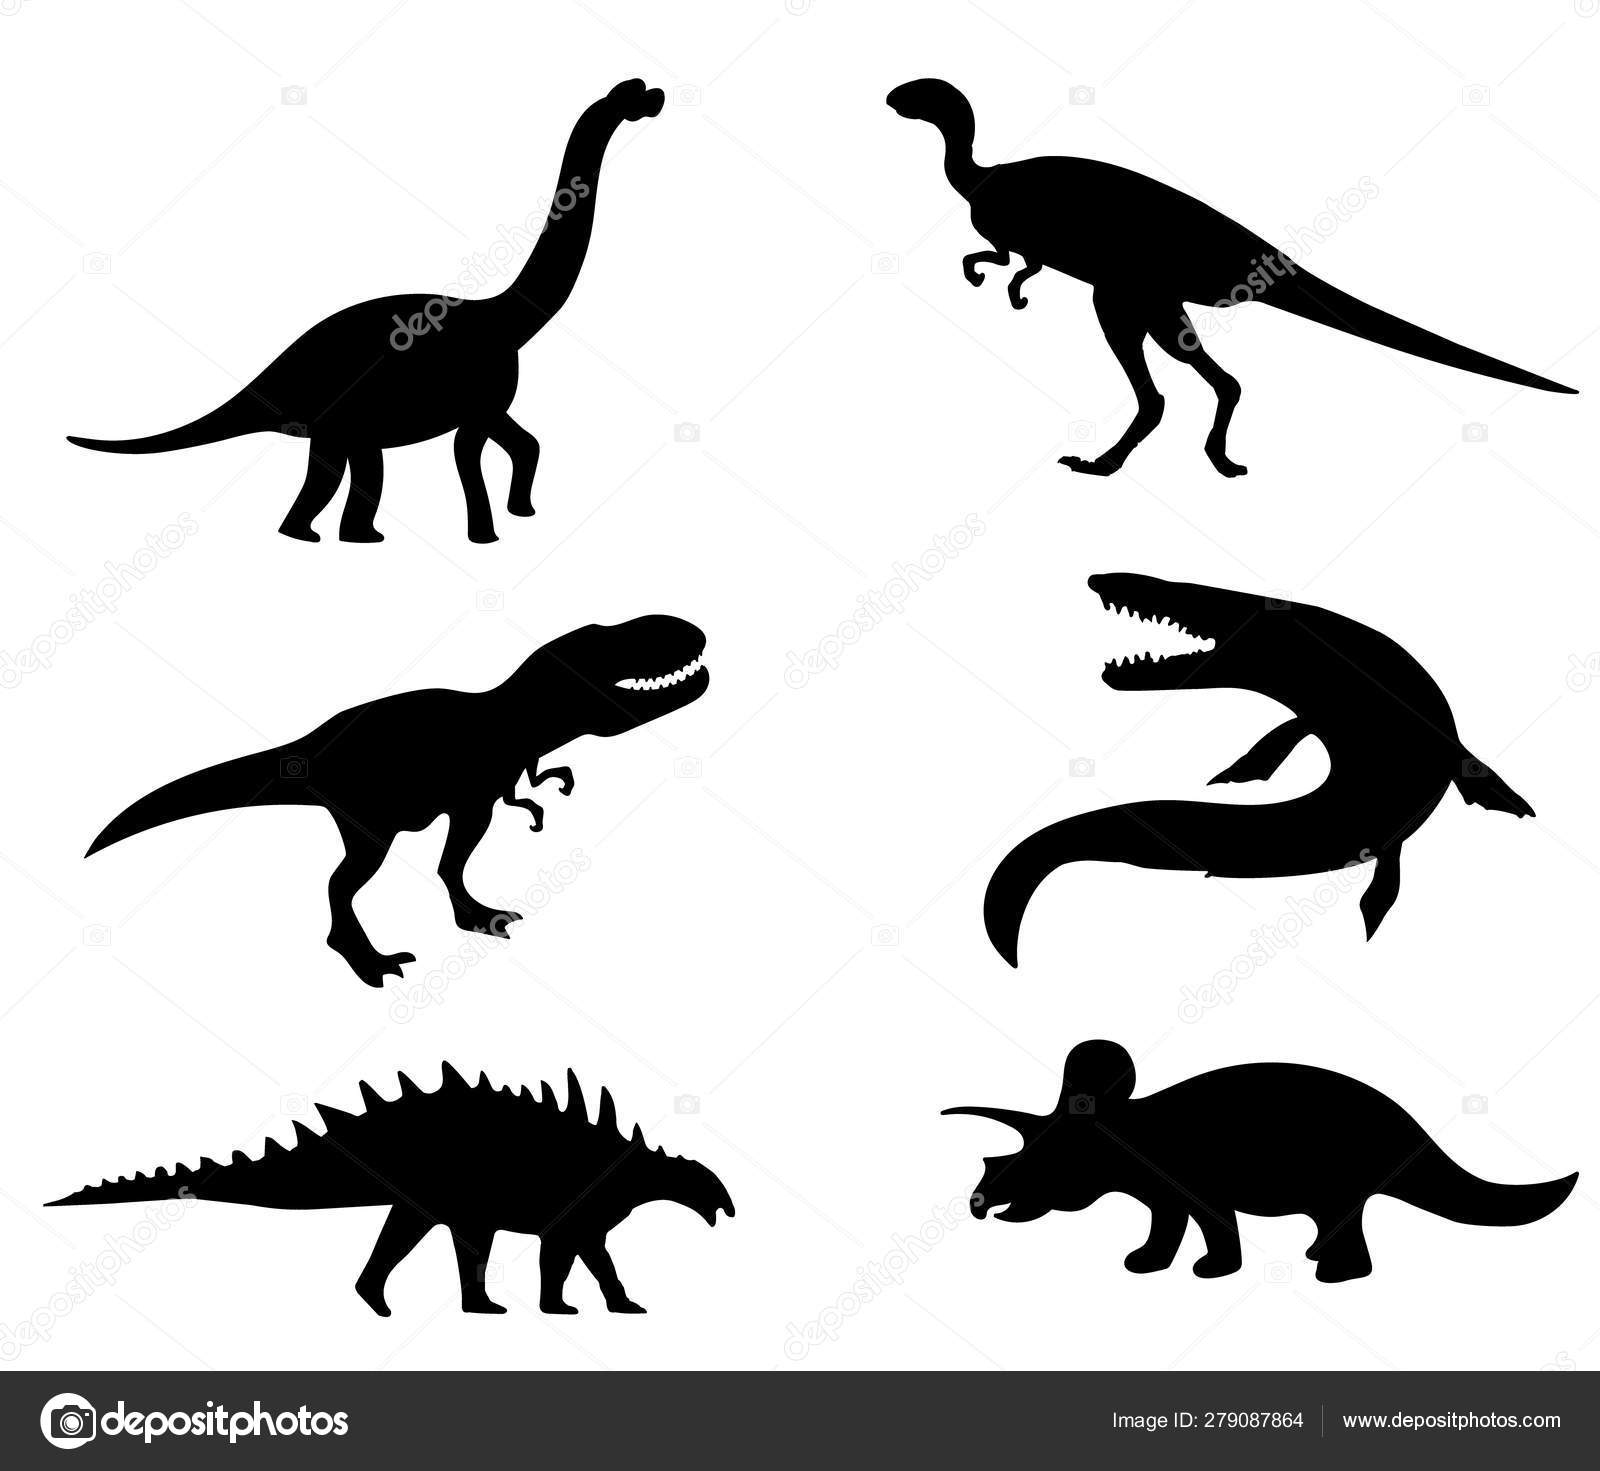 Dinosaur pterodactyloidea icon in black style Vector Image